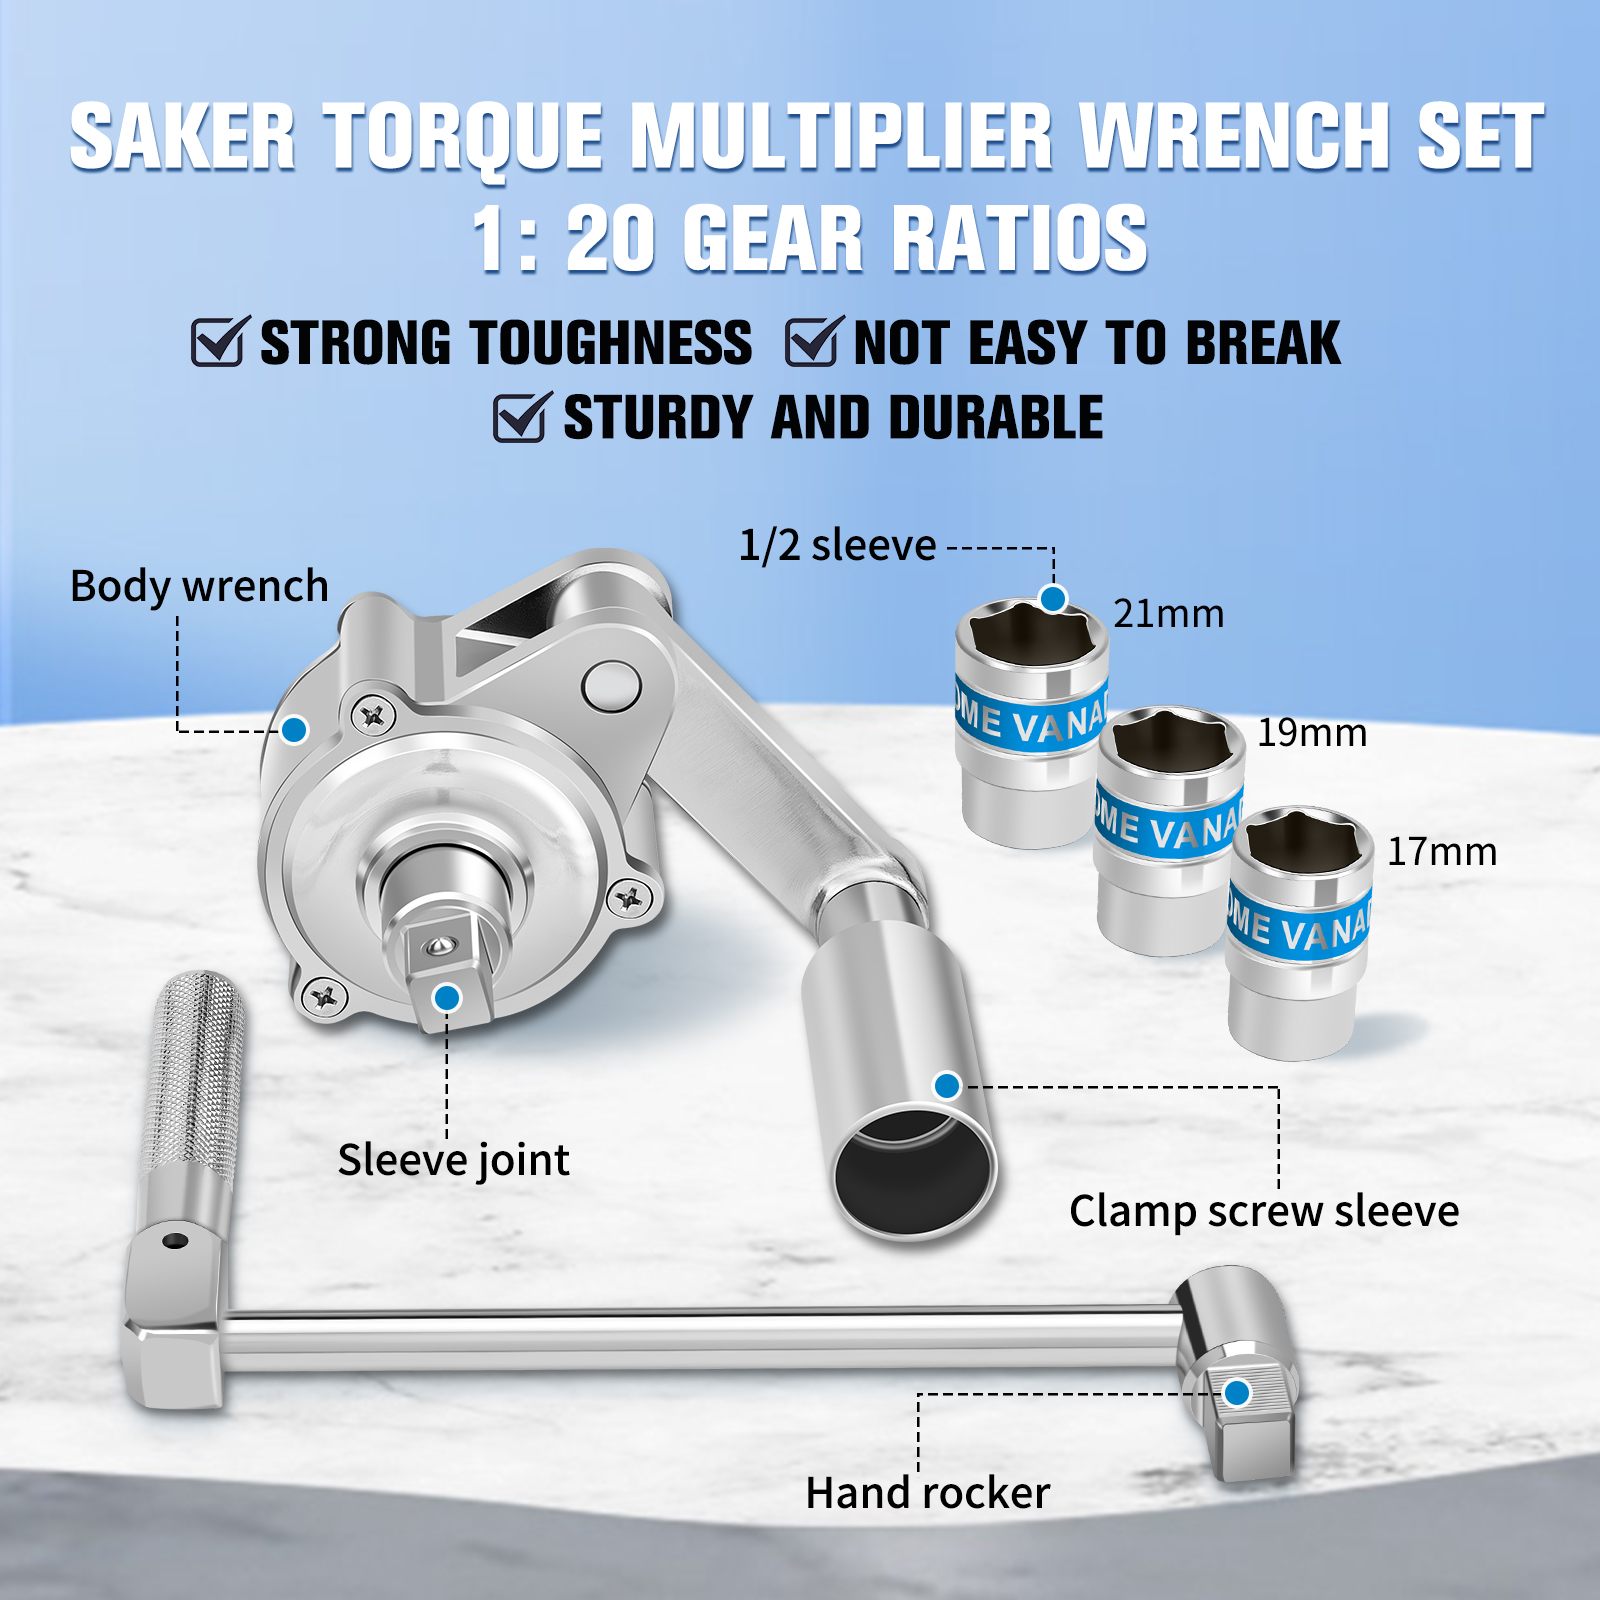 (🎯 HOT SALE- SAVE 48% OFF) Torque Multiplier Wrench Set